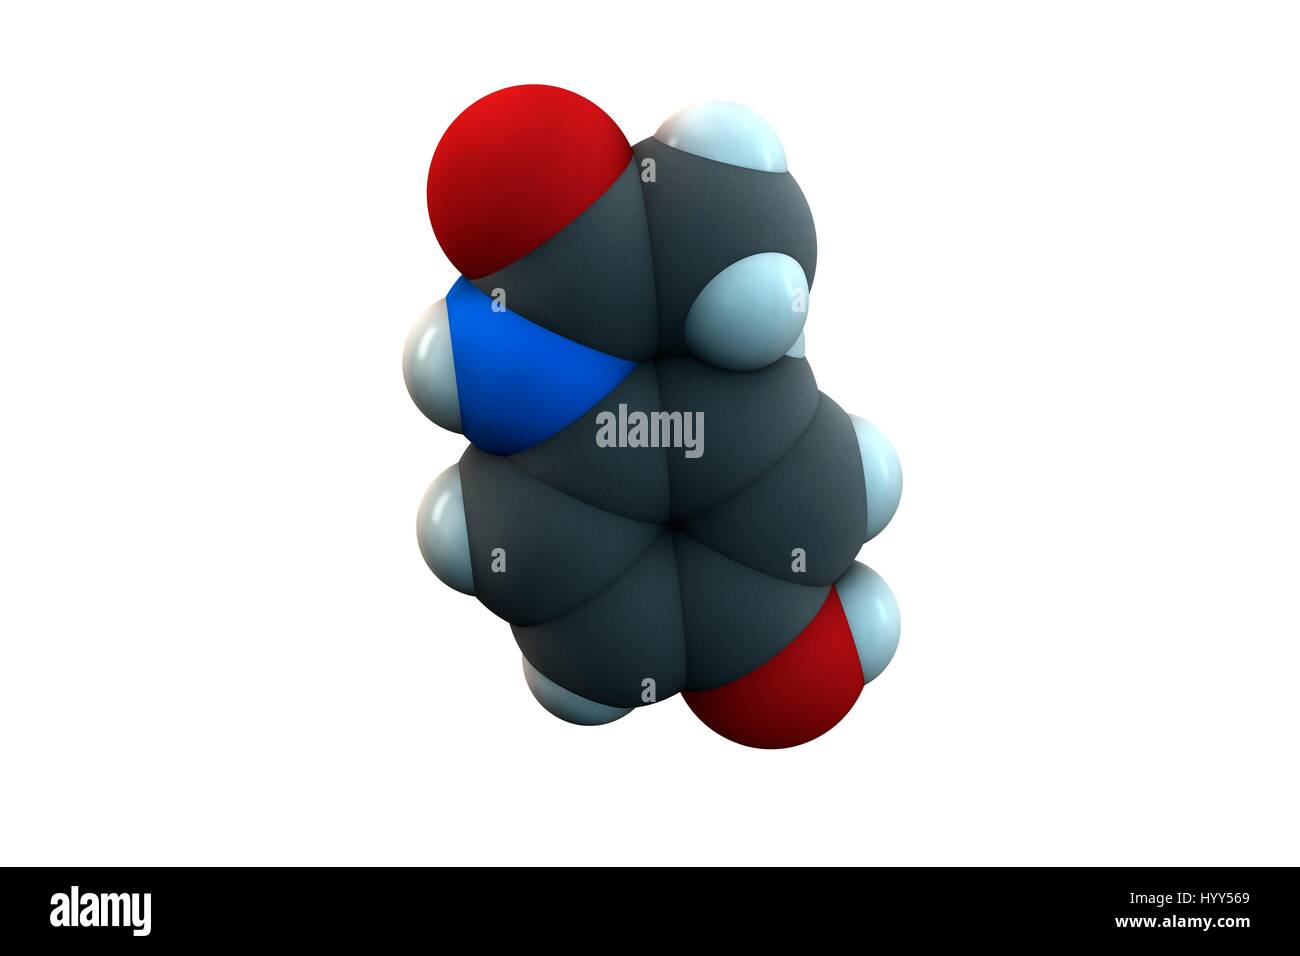 Paracetamol (Acetaminophen) drug molecule. Chemical formula is C8H9NO2. Atoms are represented as spheres: carbon (grey), hydrogen (white), nitrogen (blue), oxygen (red). Illustration. Stock Photo